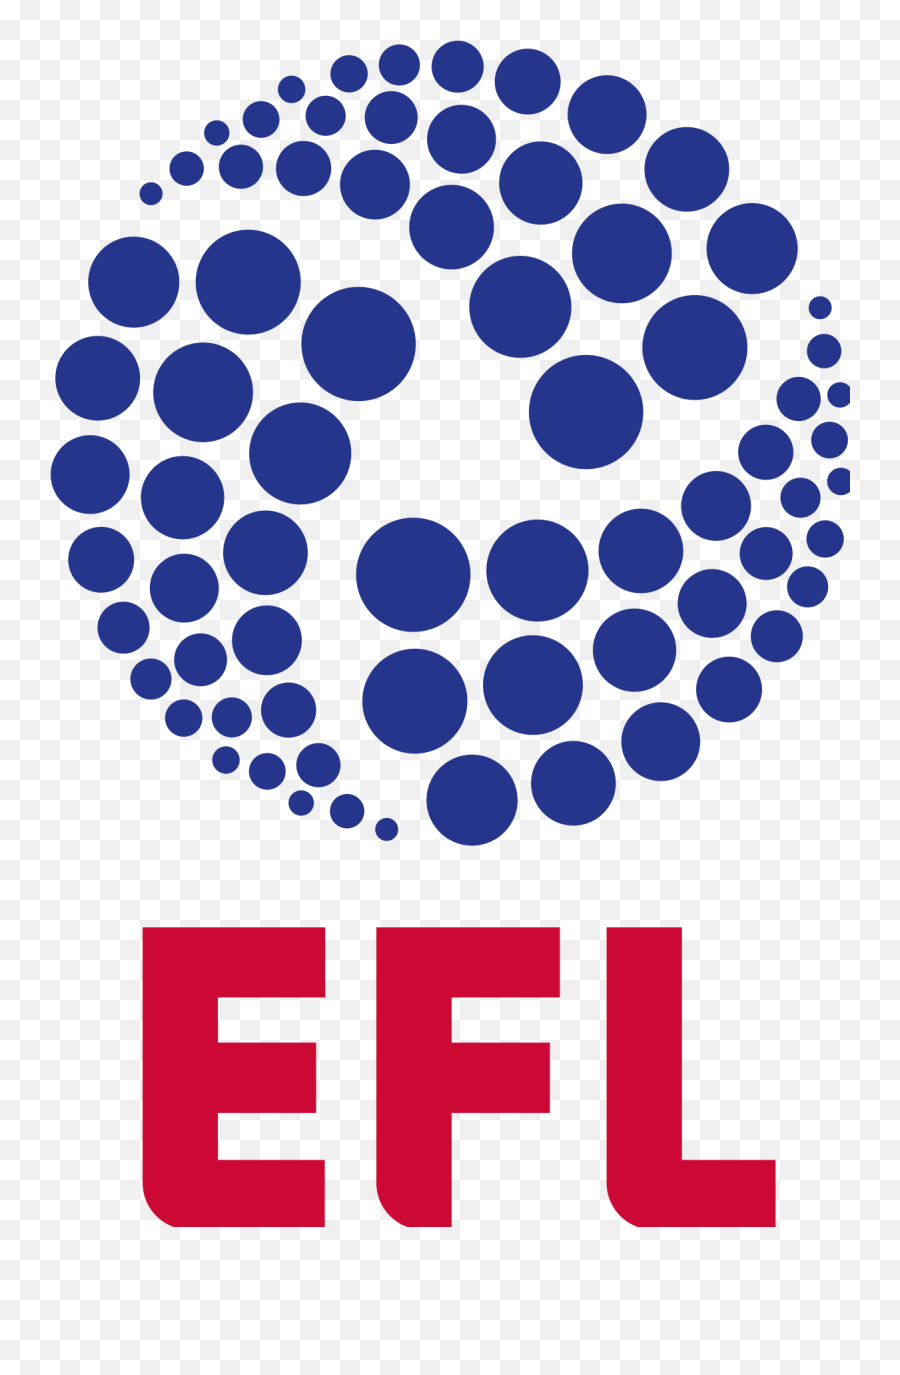 Pog Champ Png - English Football League,Pogchamp Transparent Background